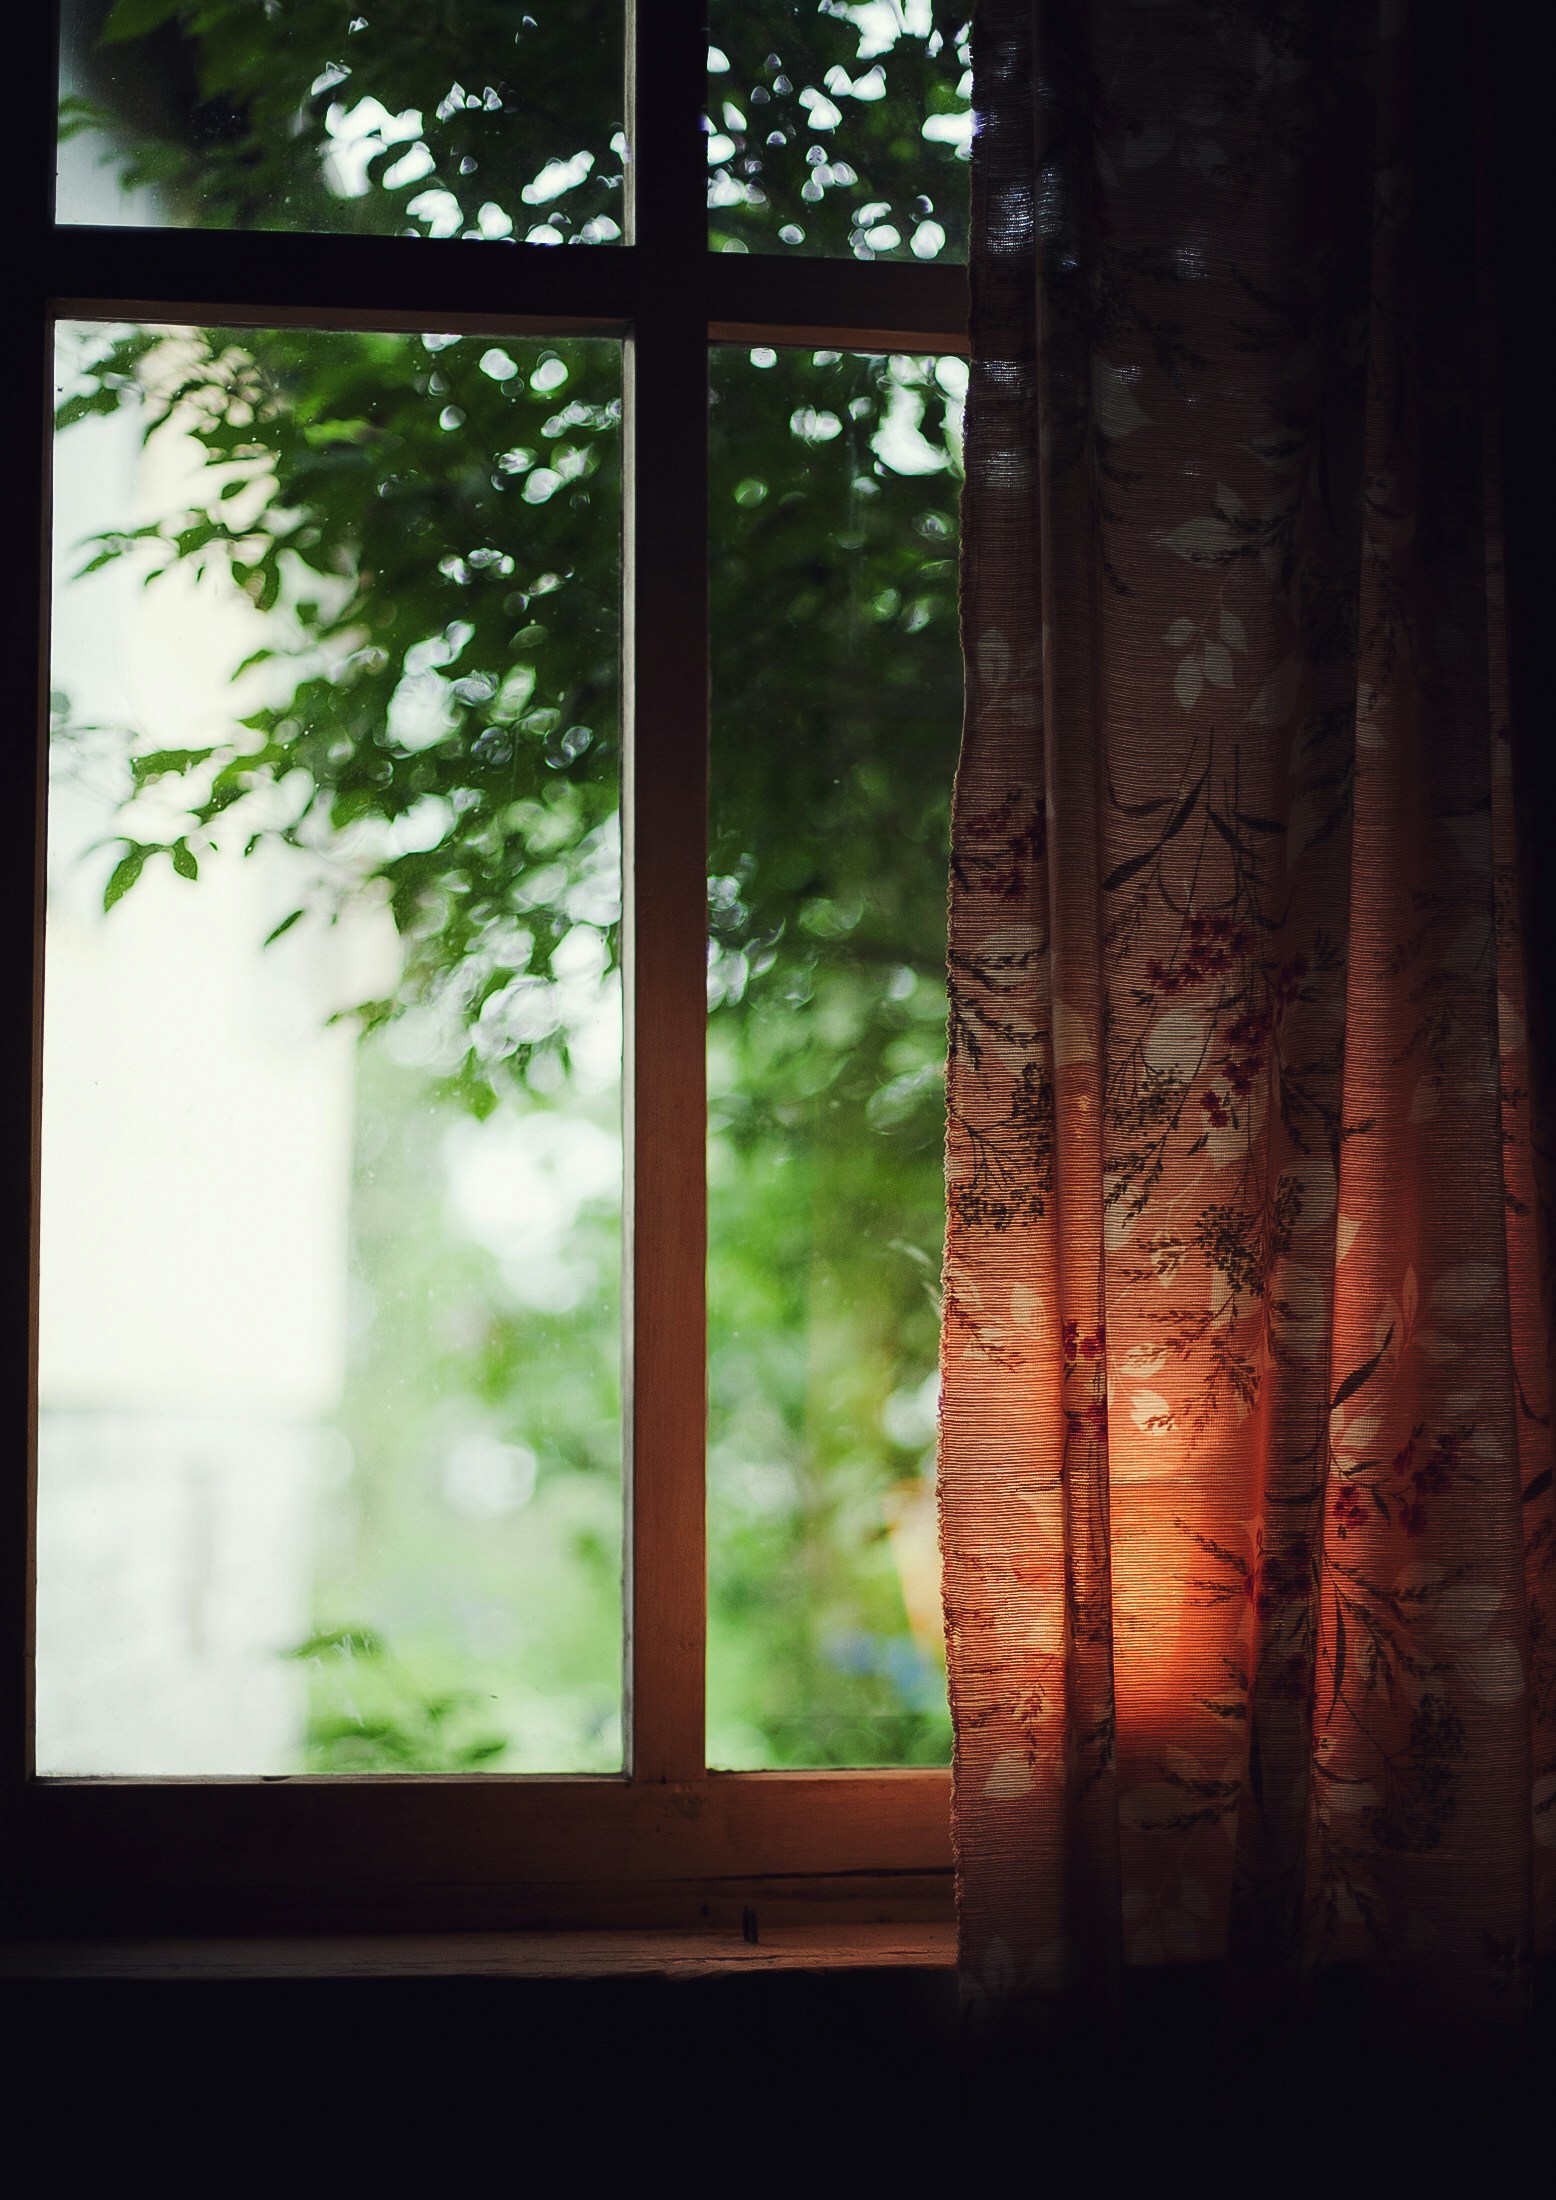 sunlight shining through a window at dusk on a curtain